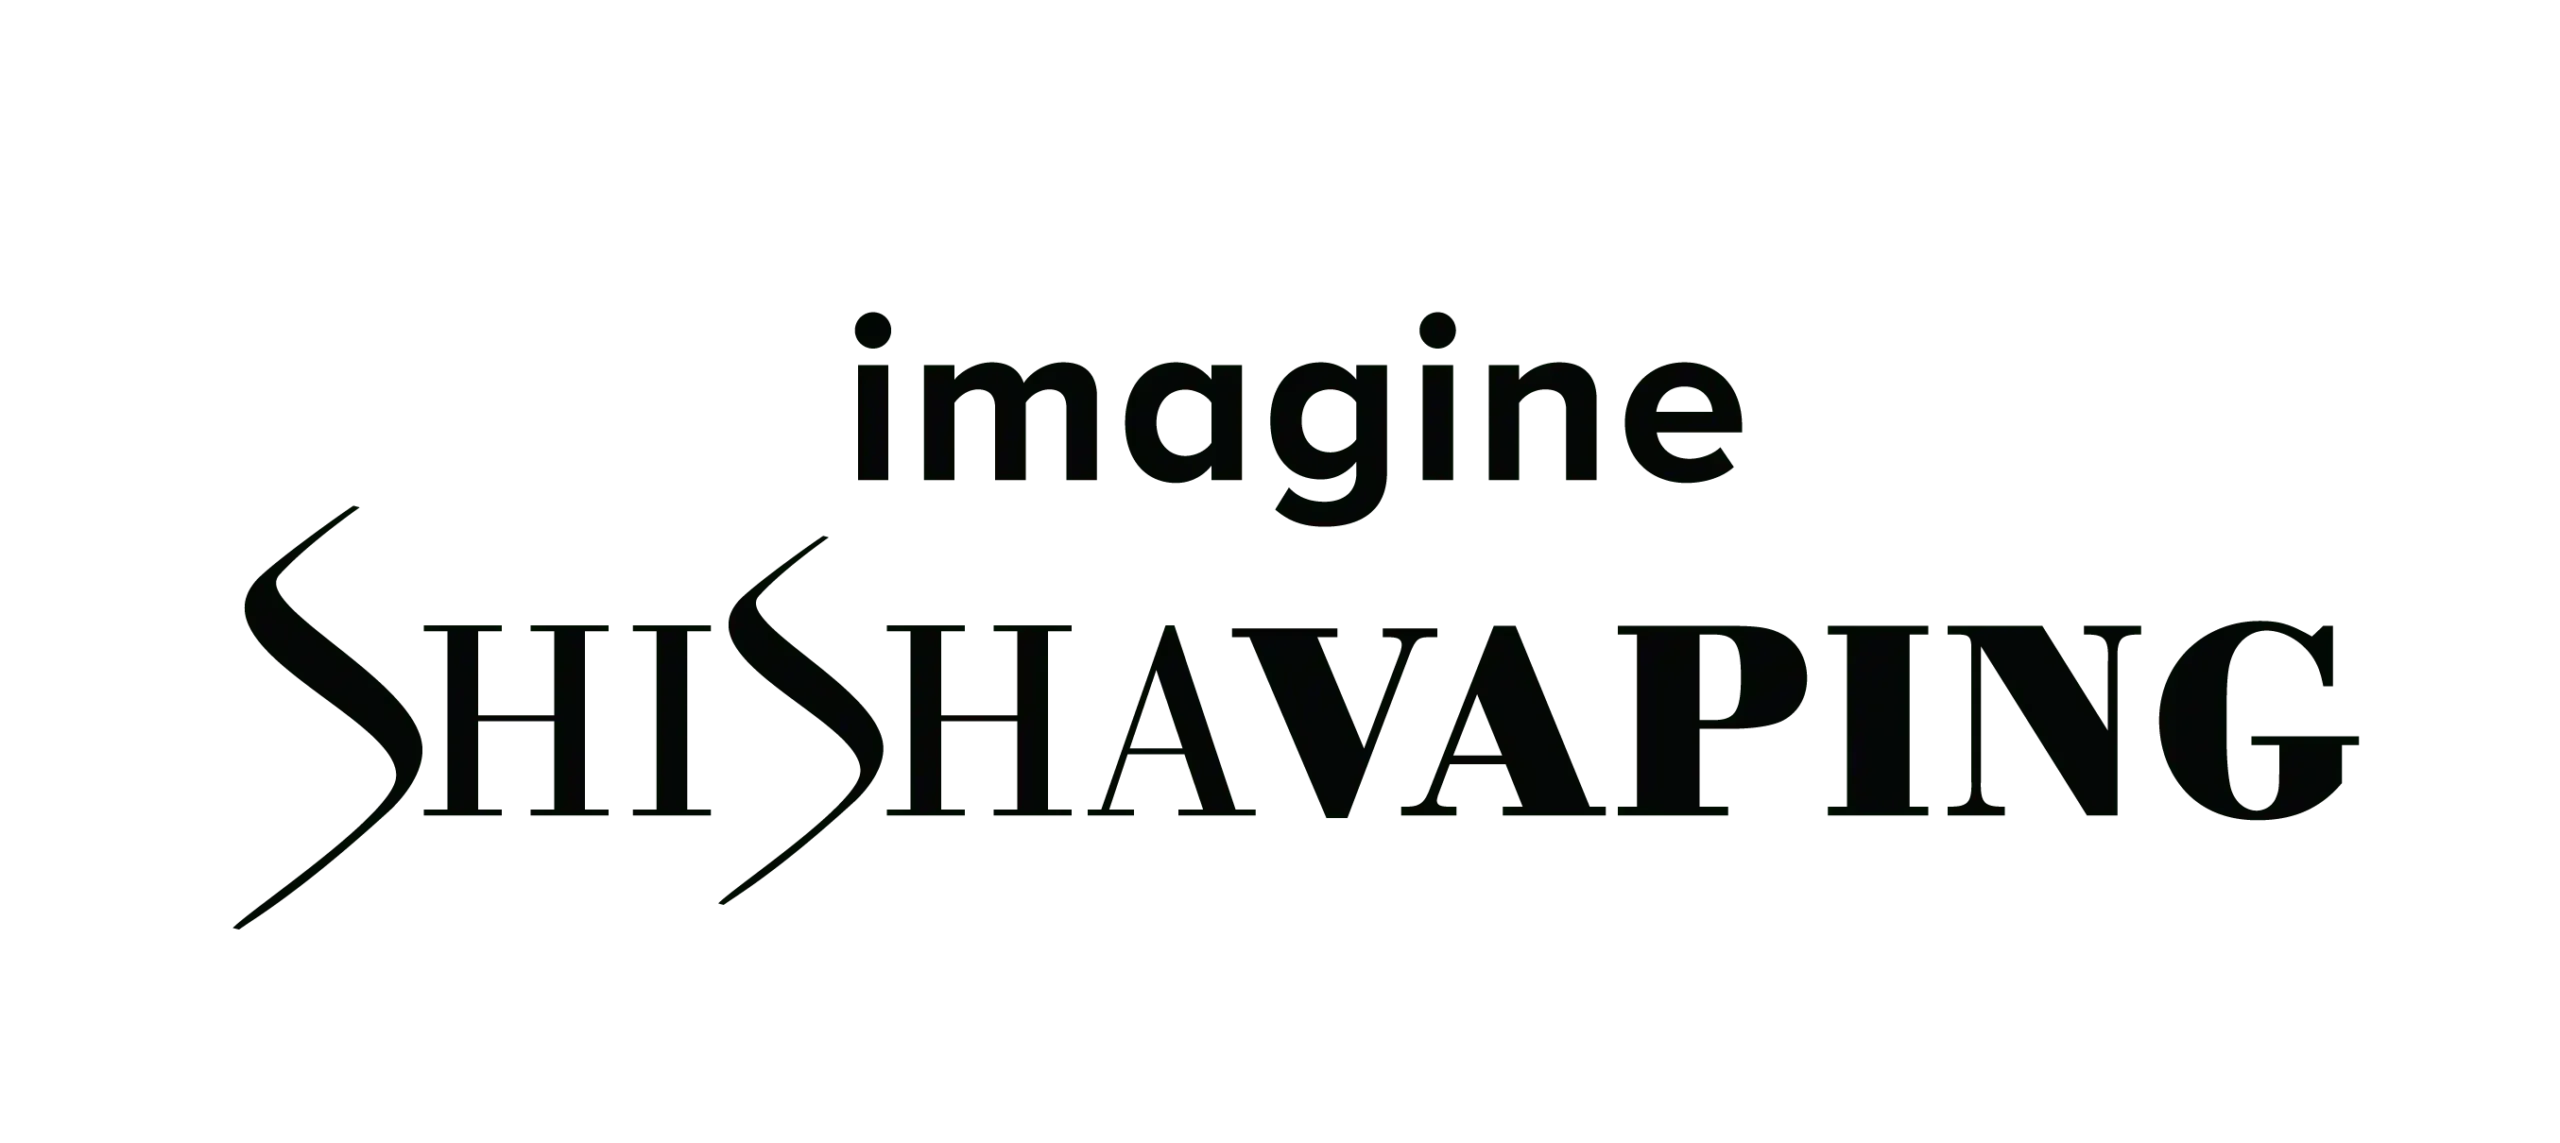 Imagine Shisha Vaping